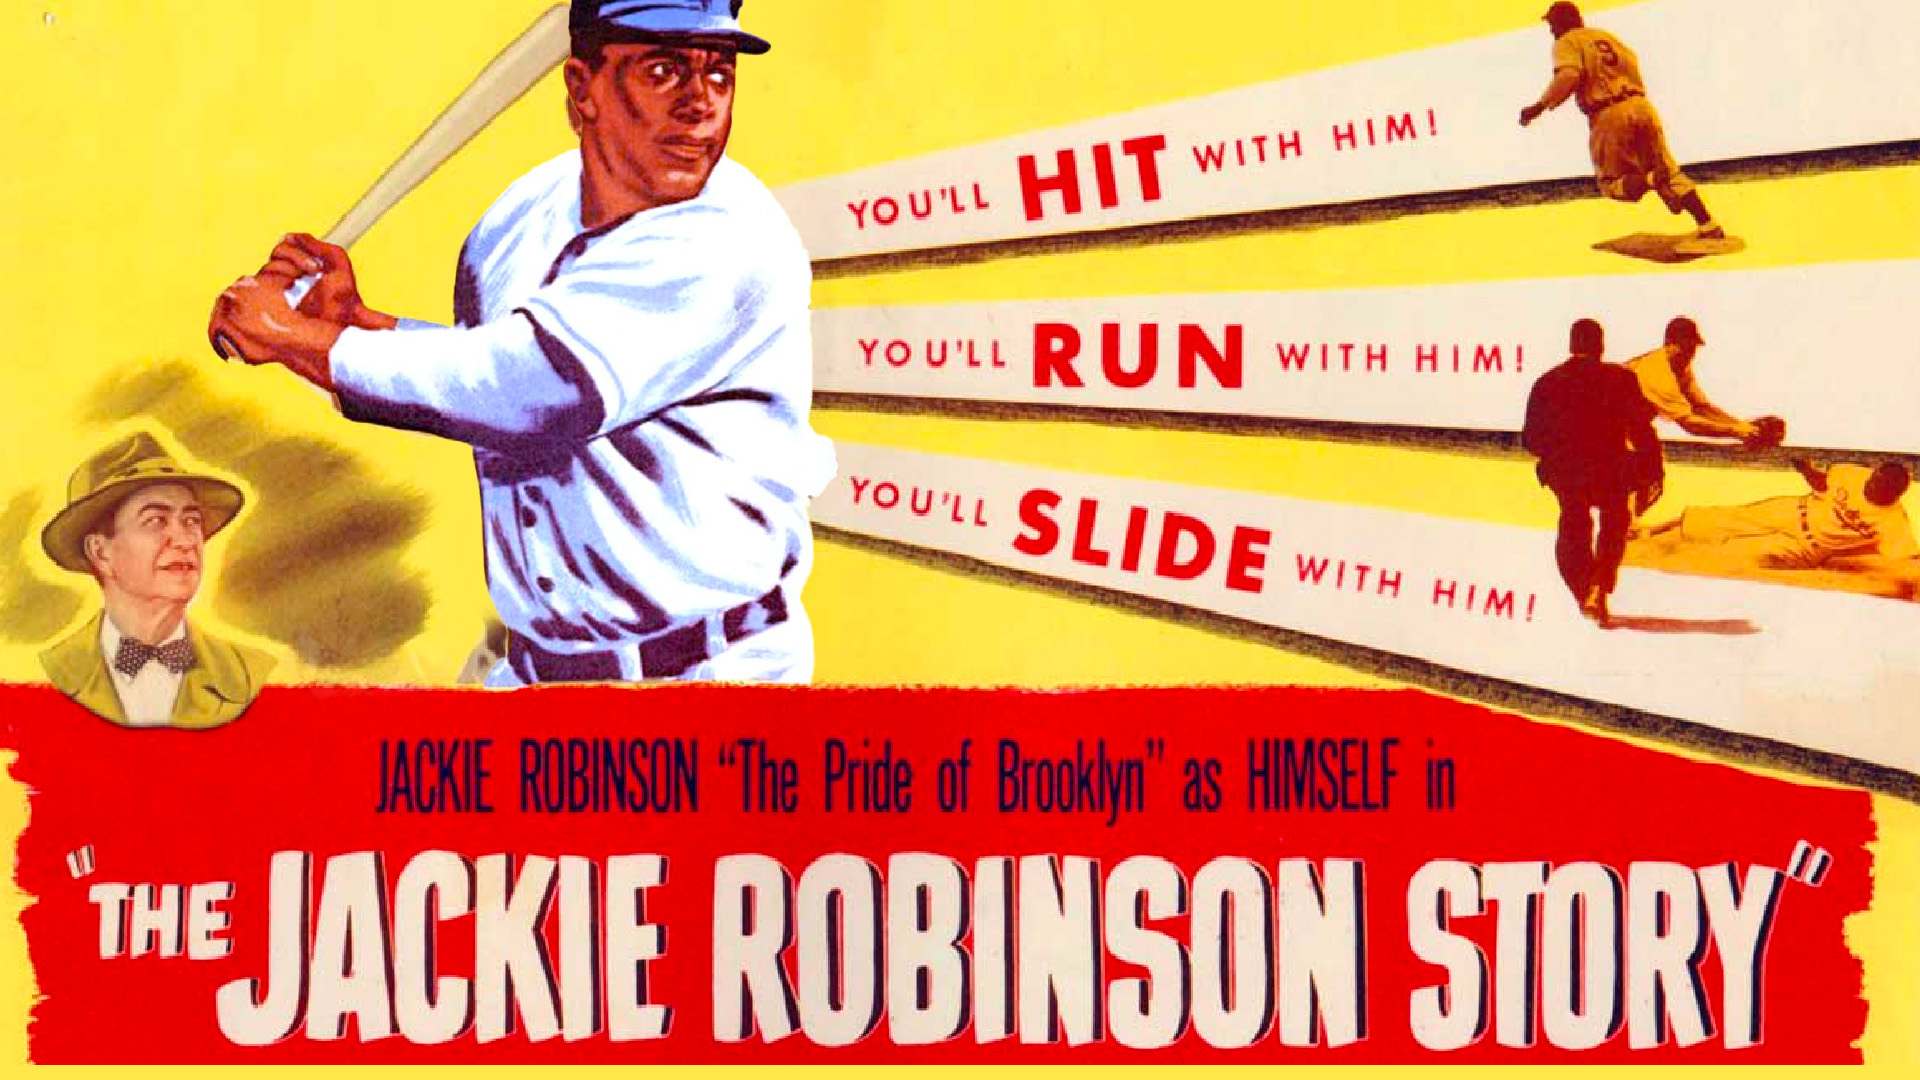 The Jackie Robinson Story 1950